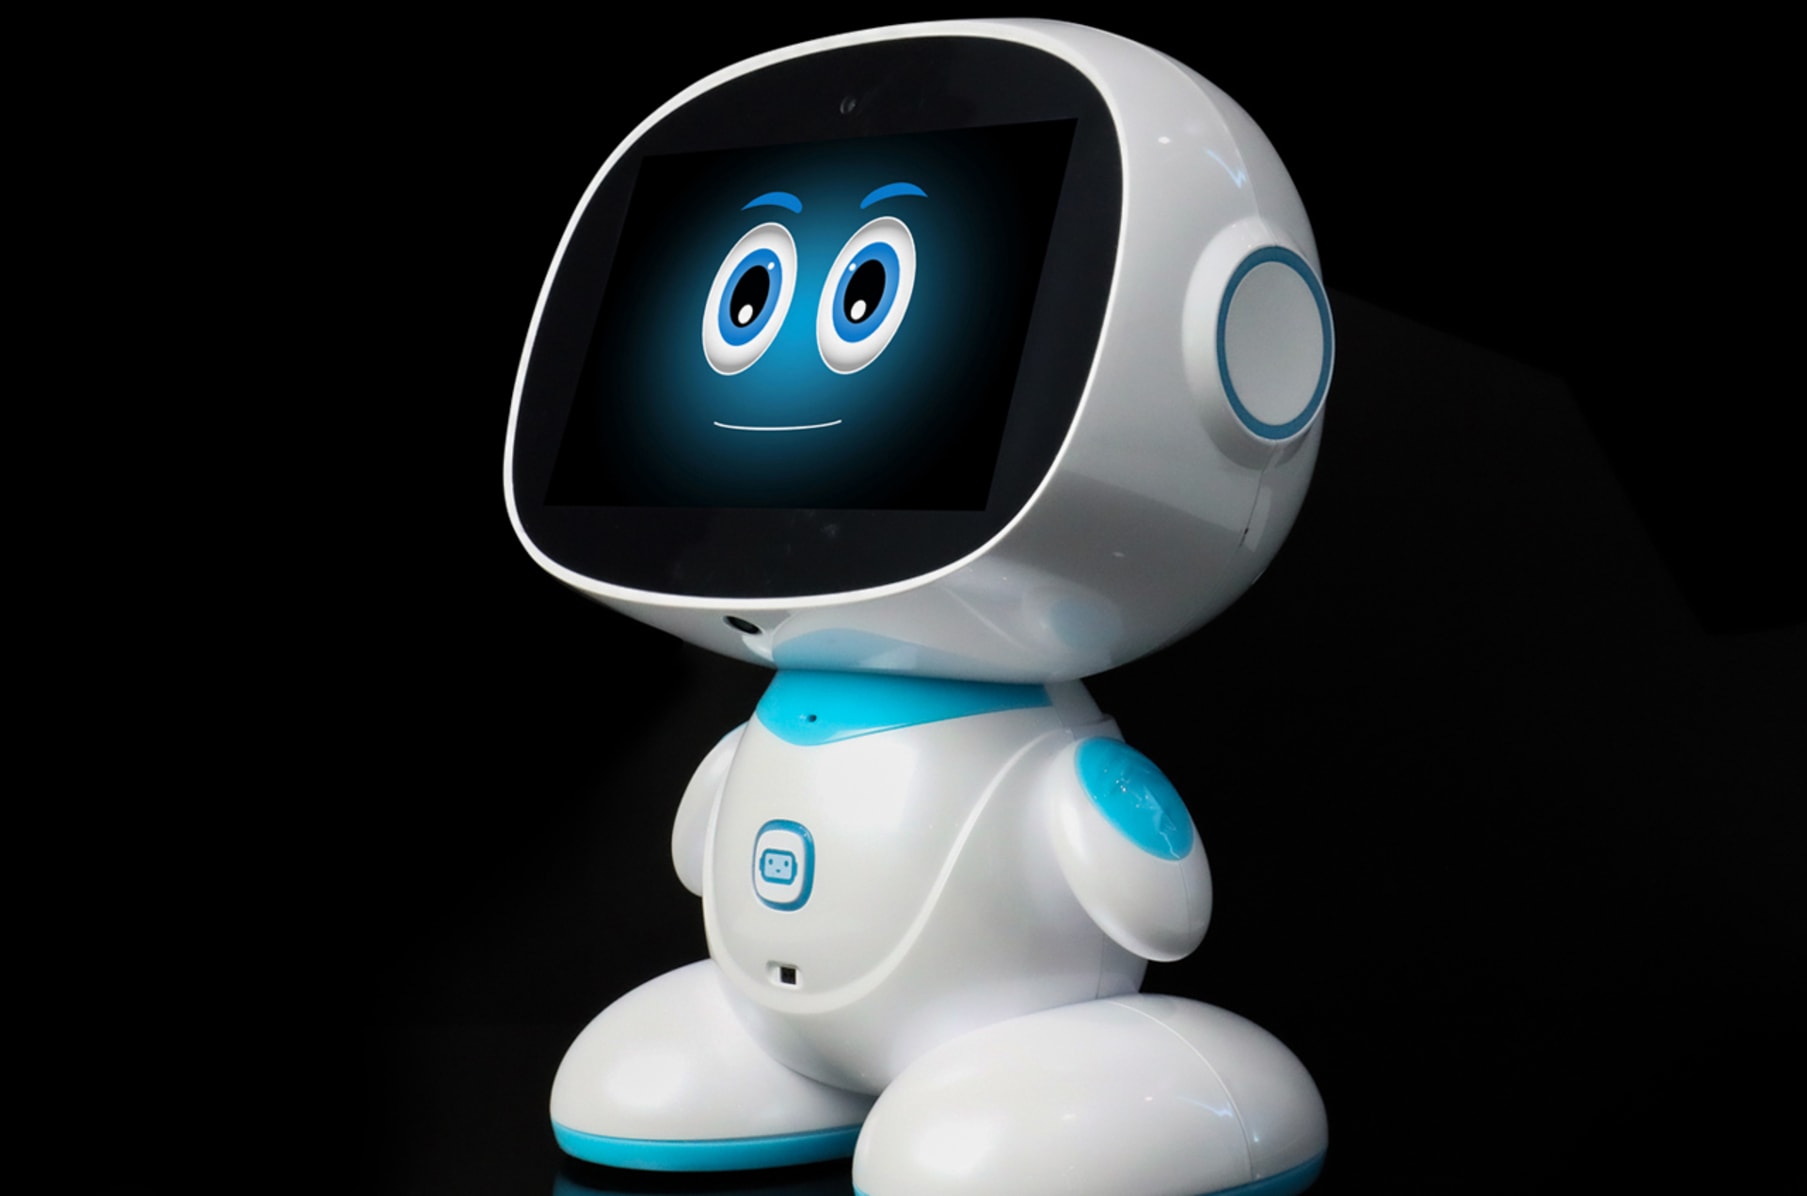 Misa Interactive Robot